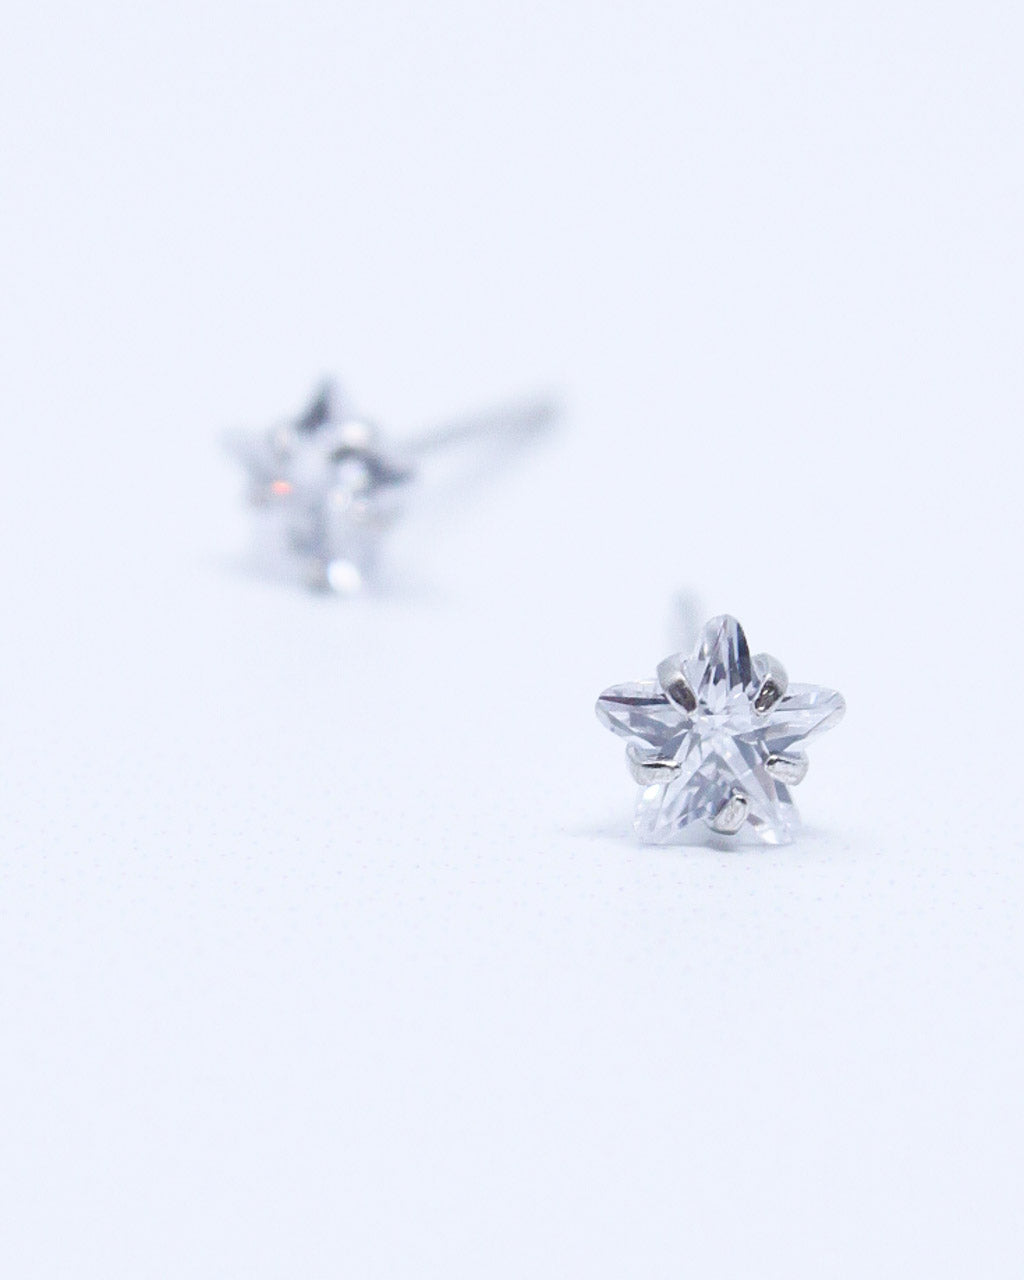 Tiny Star Earrings